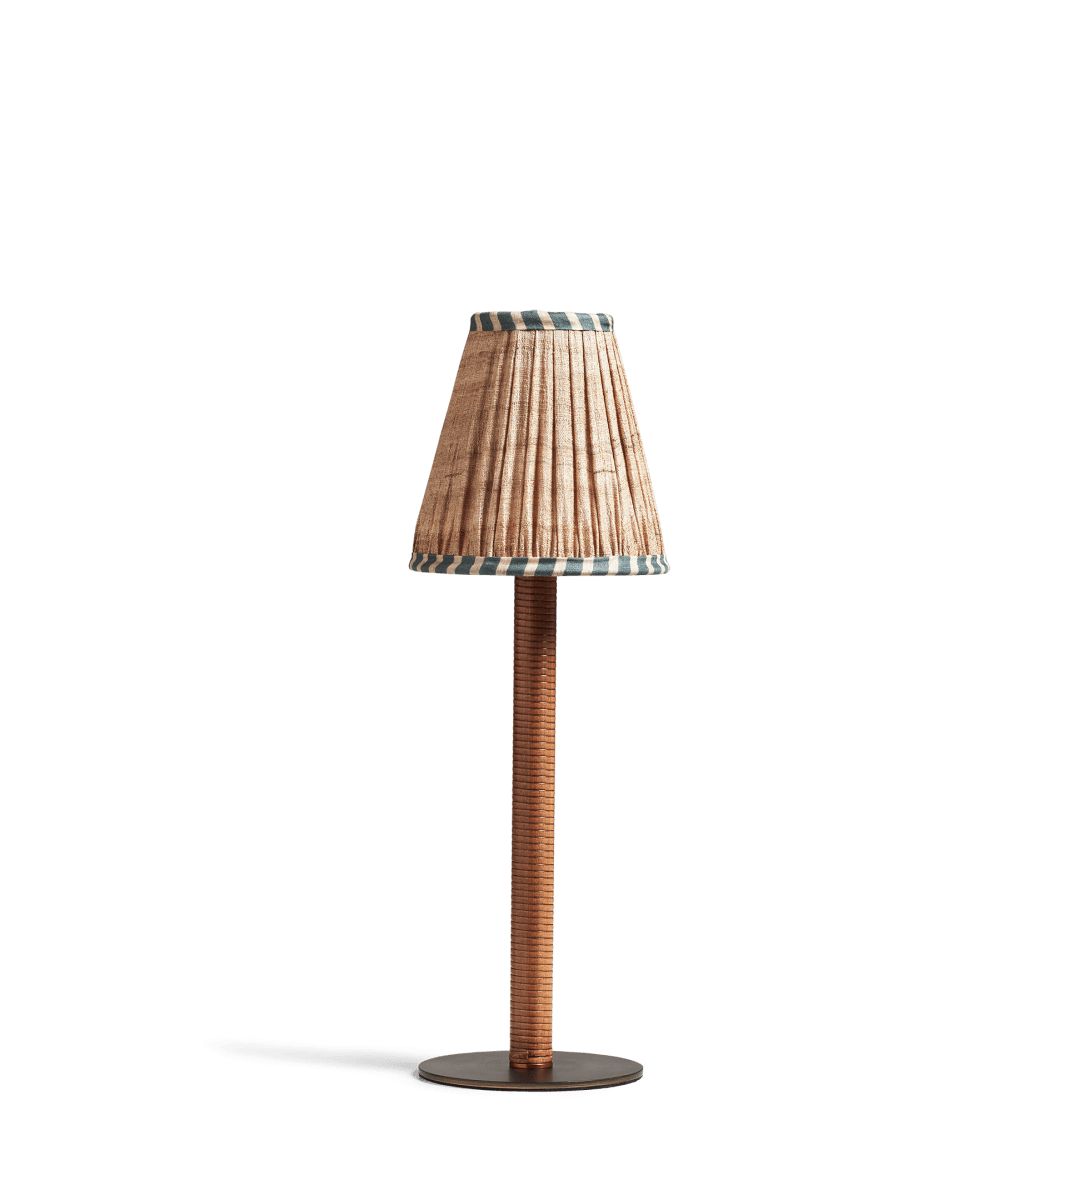 Olira Wireless Table Lamp and Elgin Shade - Natural/Teal | OKA US